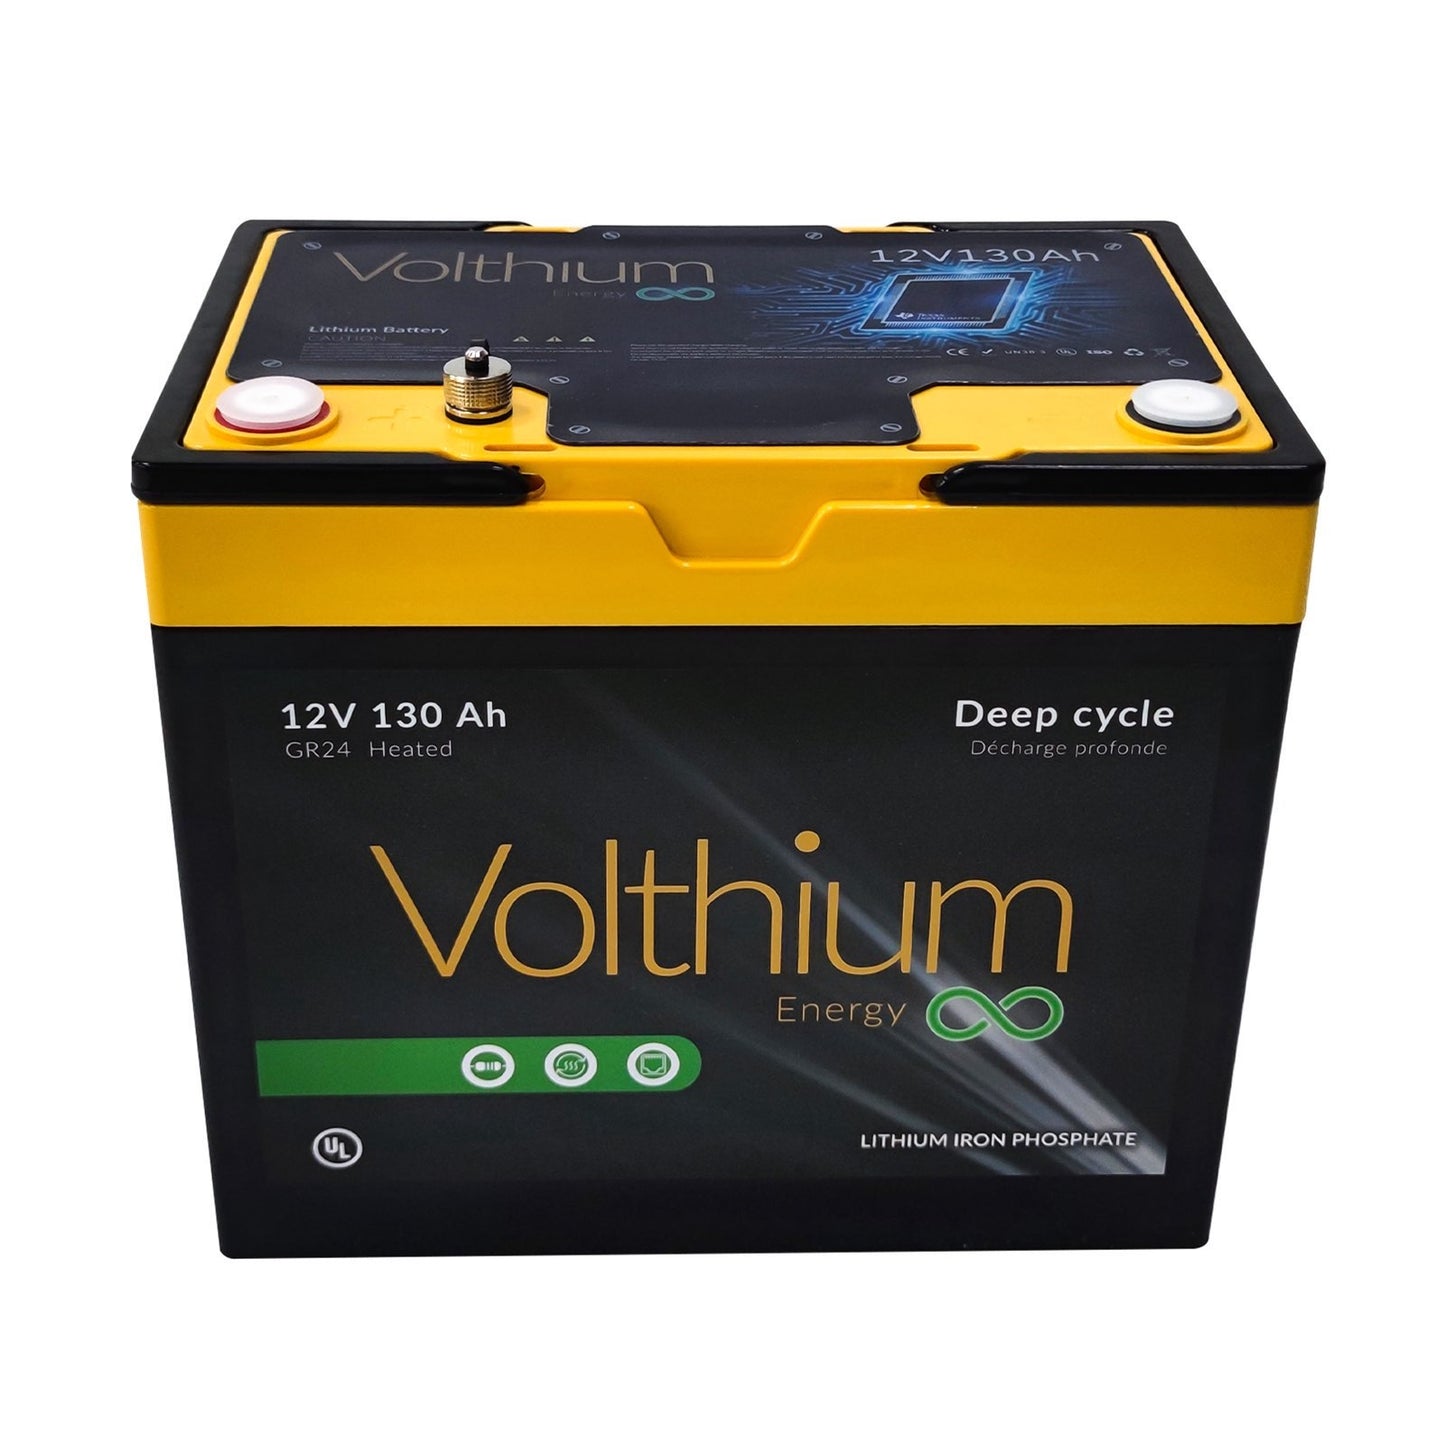 Volthium 12V 130AH Battery SELF-HEATING